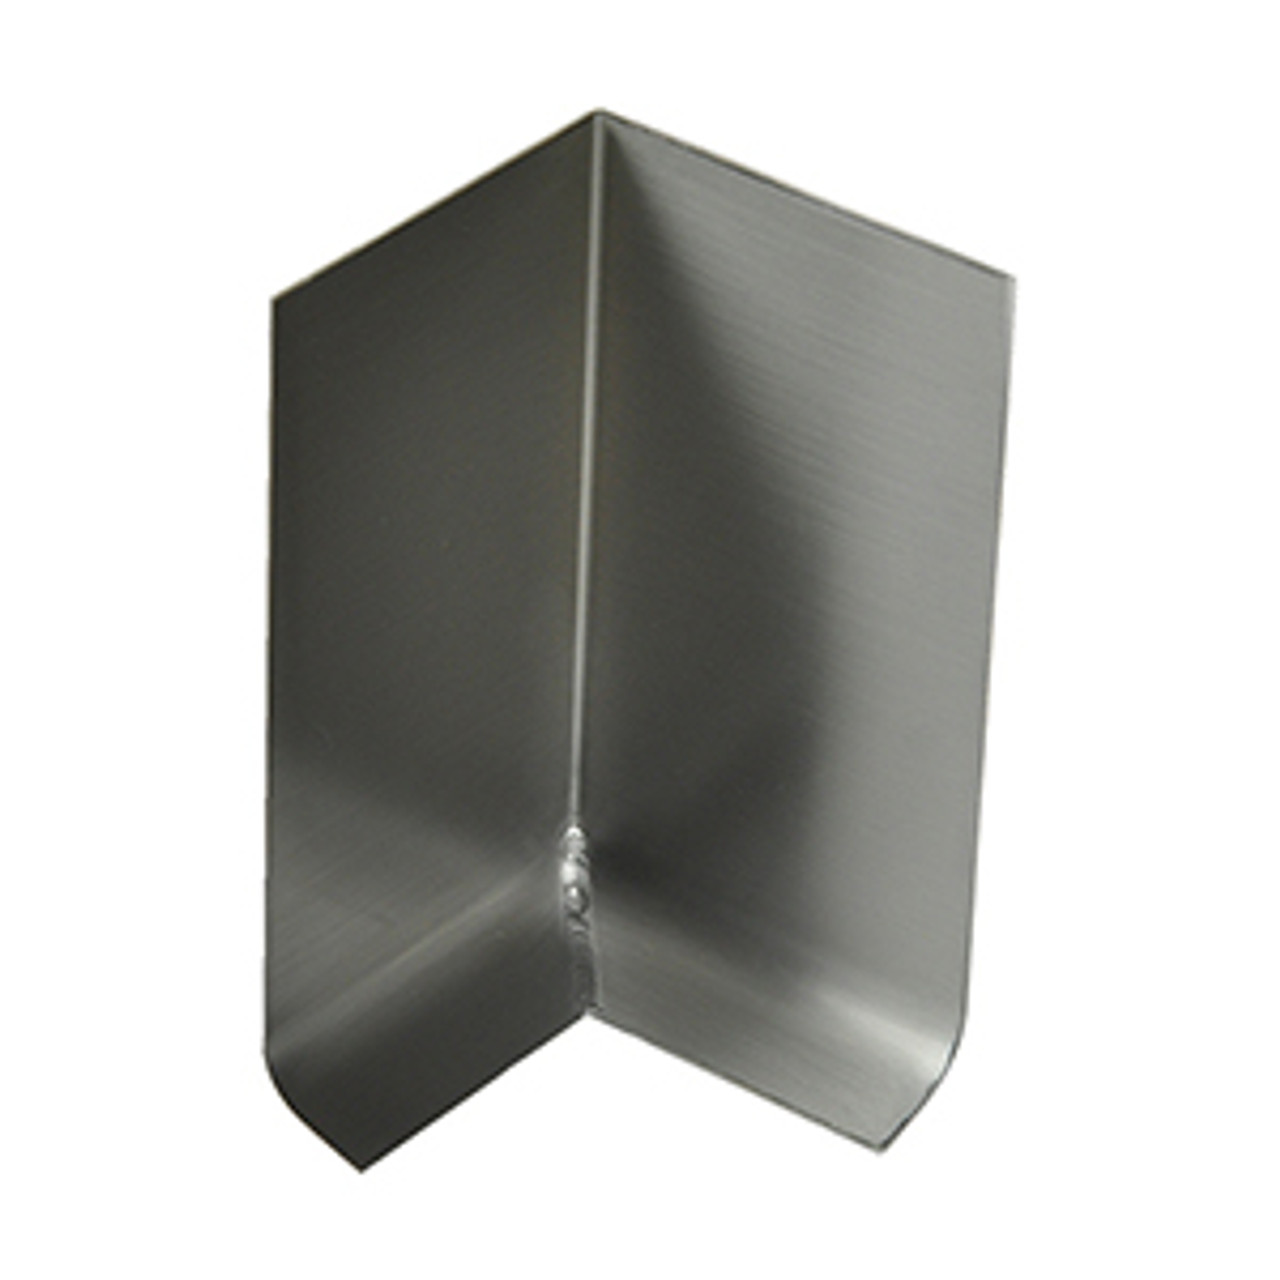 20ga Stainless Steel Corner Guards, Sheet Metal Wall Angle